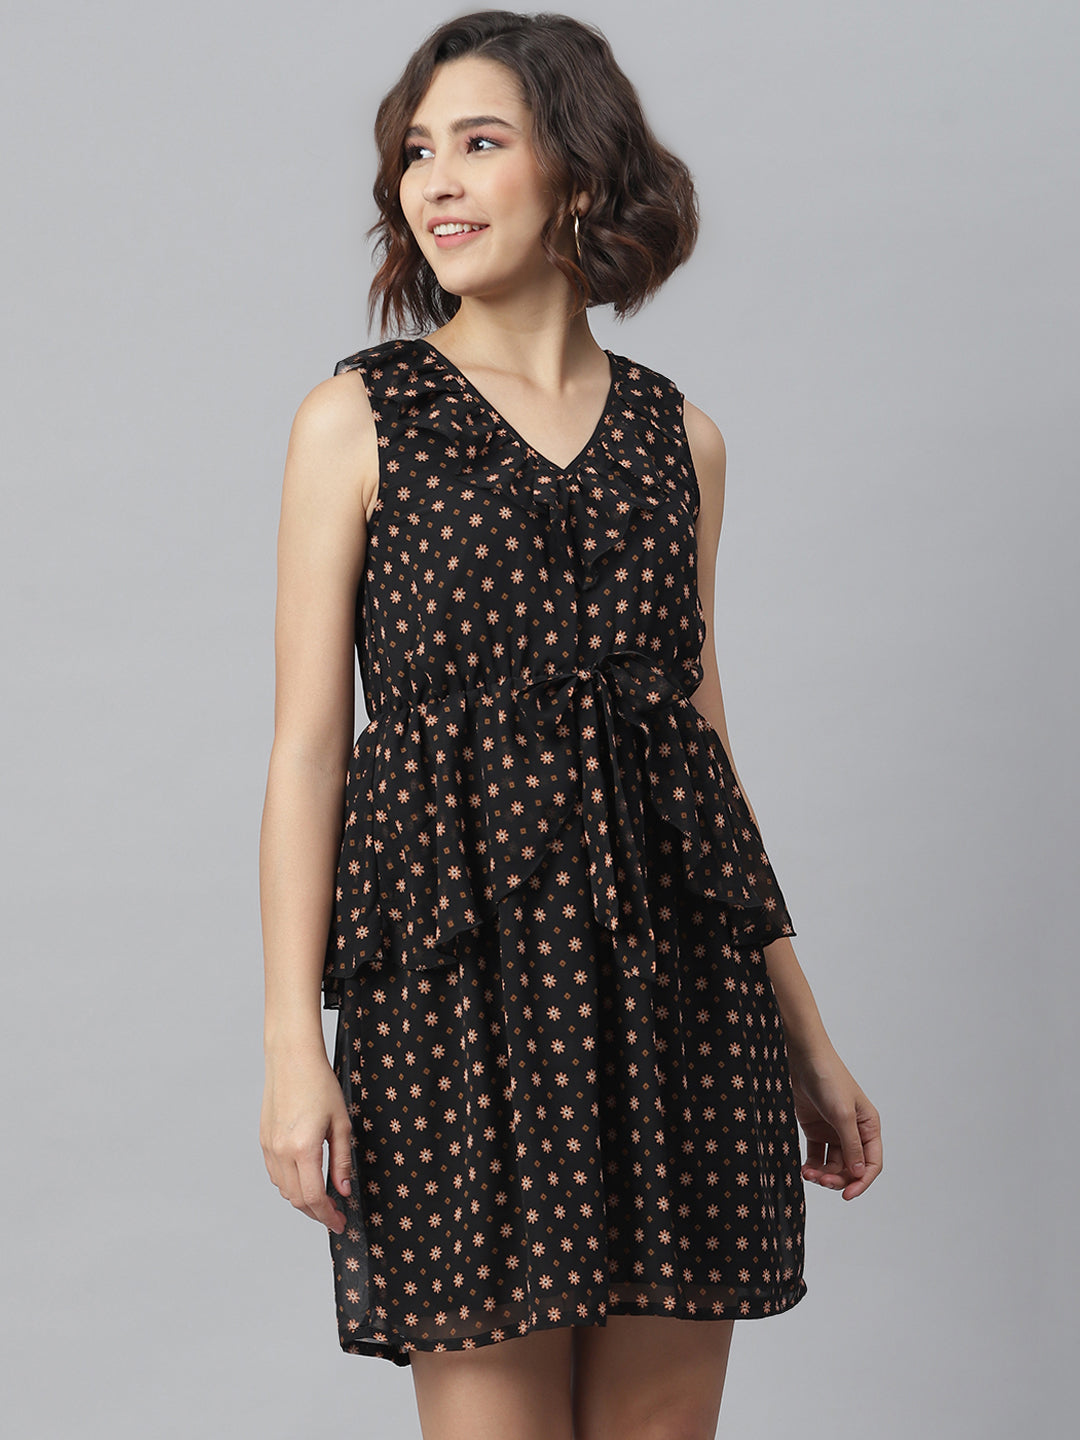 Women's Black Printed Peplum Style Dress - StyleStone